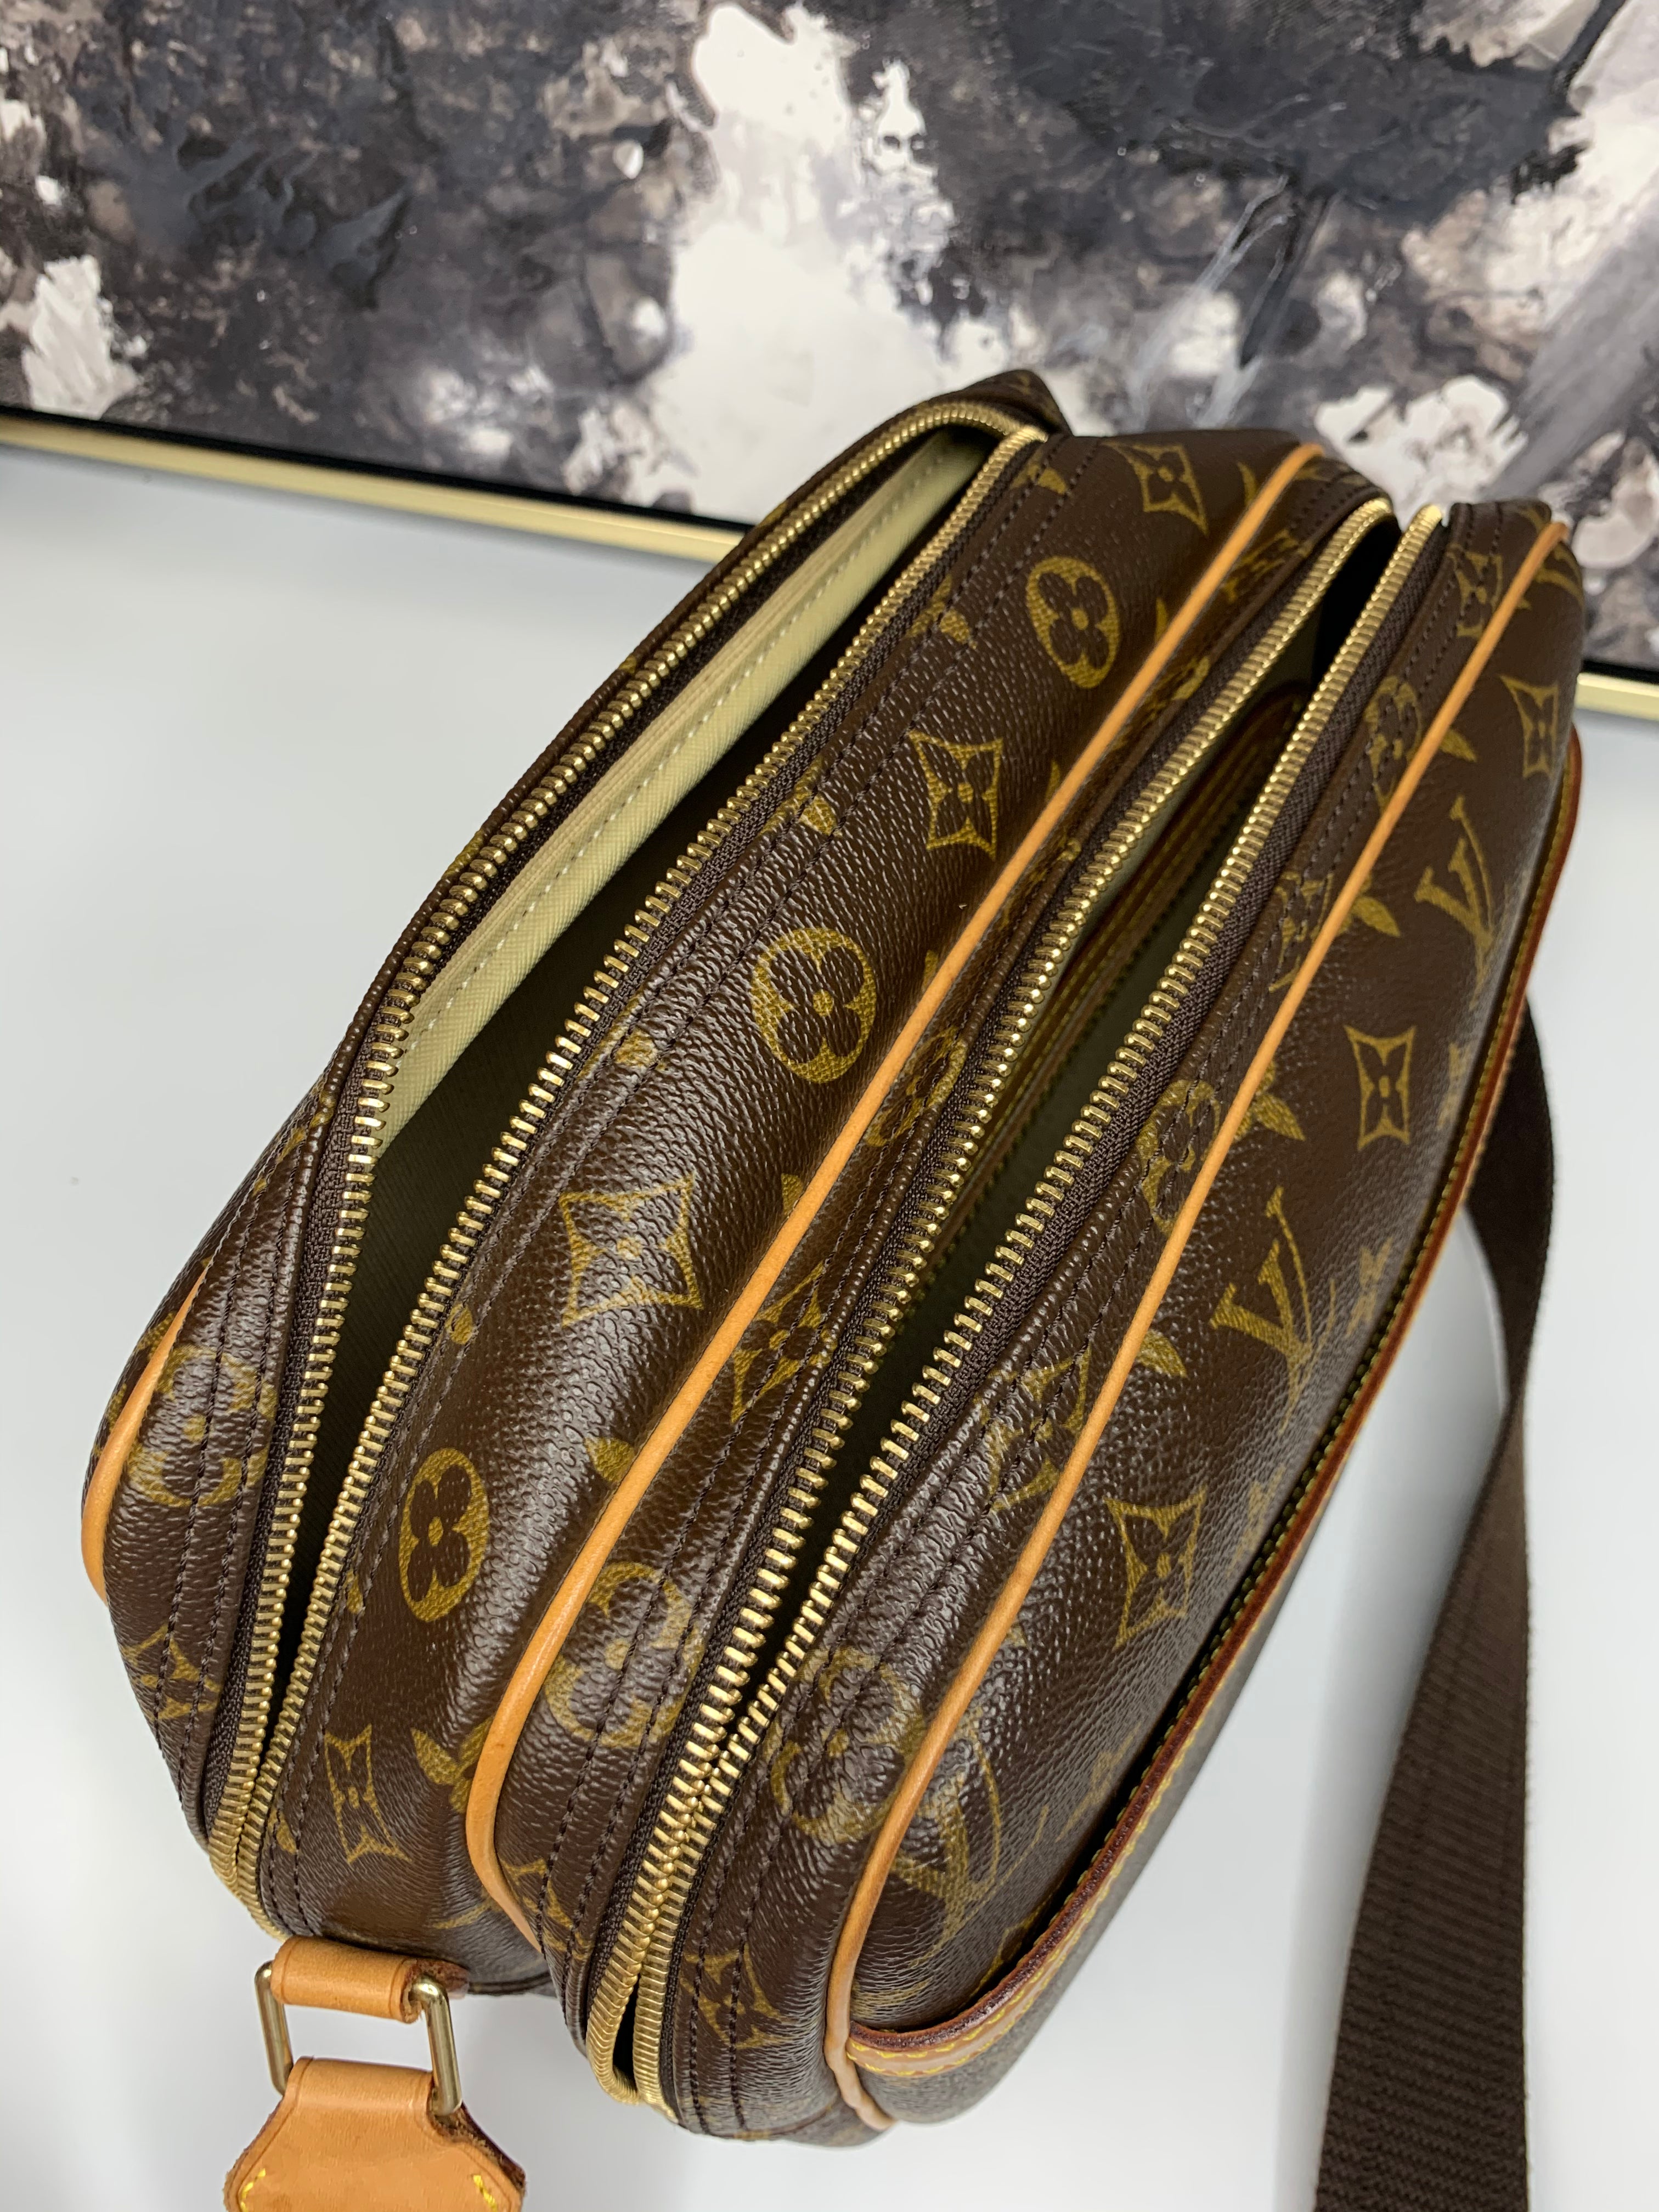 Louis Vuitton Reporter PM Monogram Travel Bag